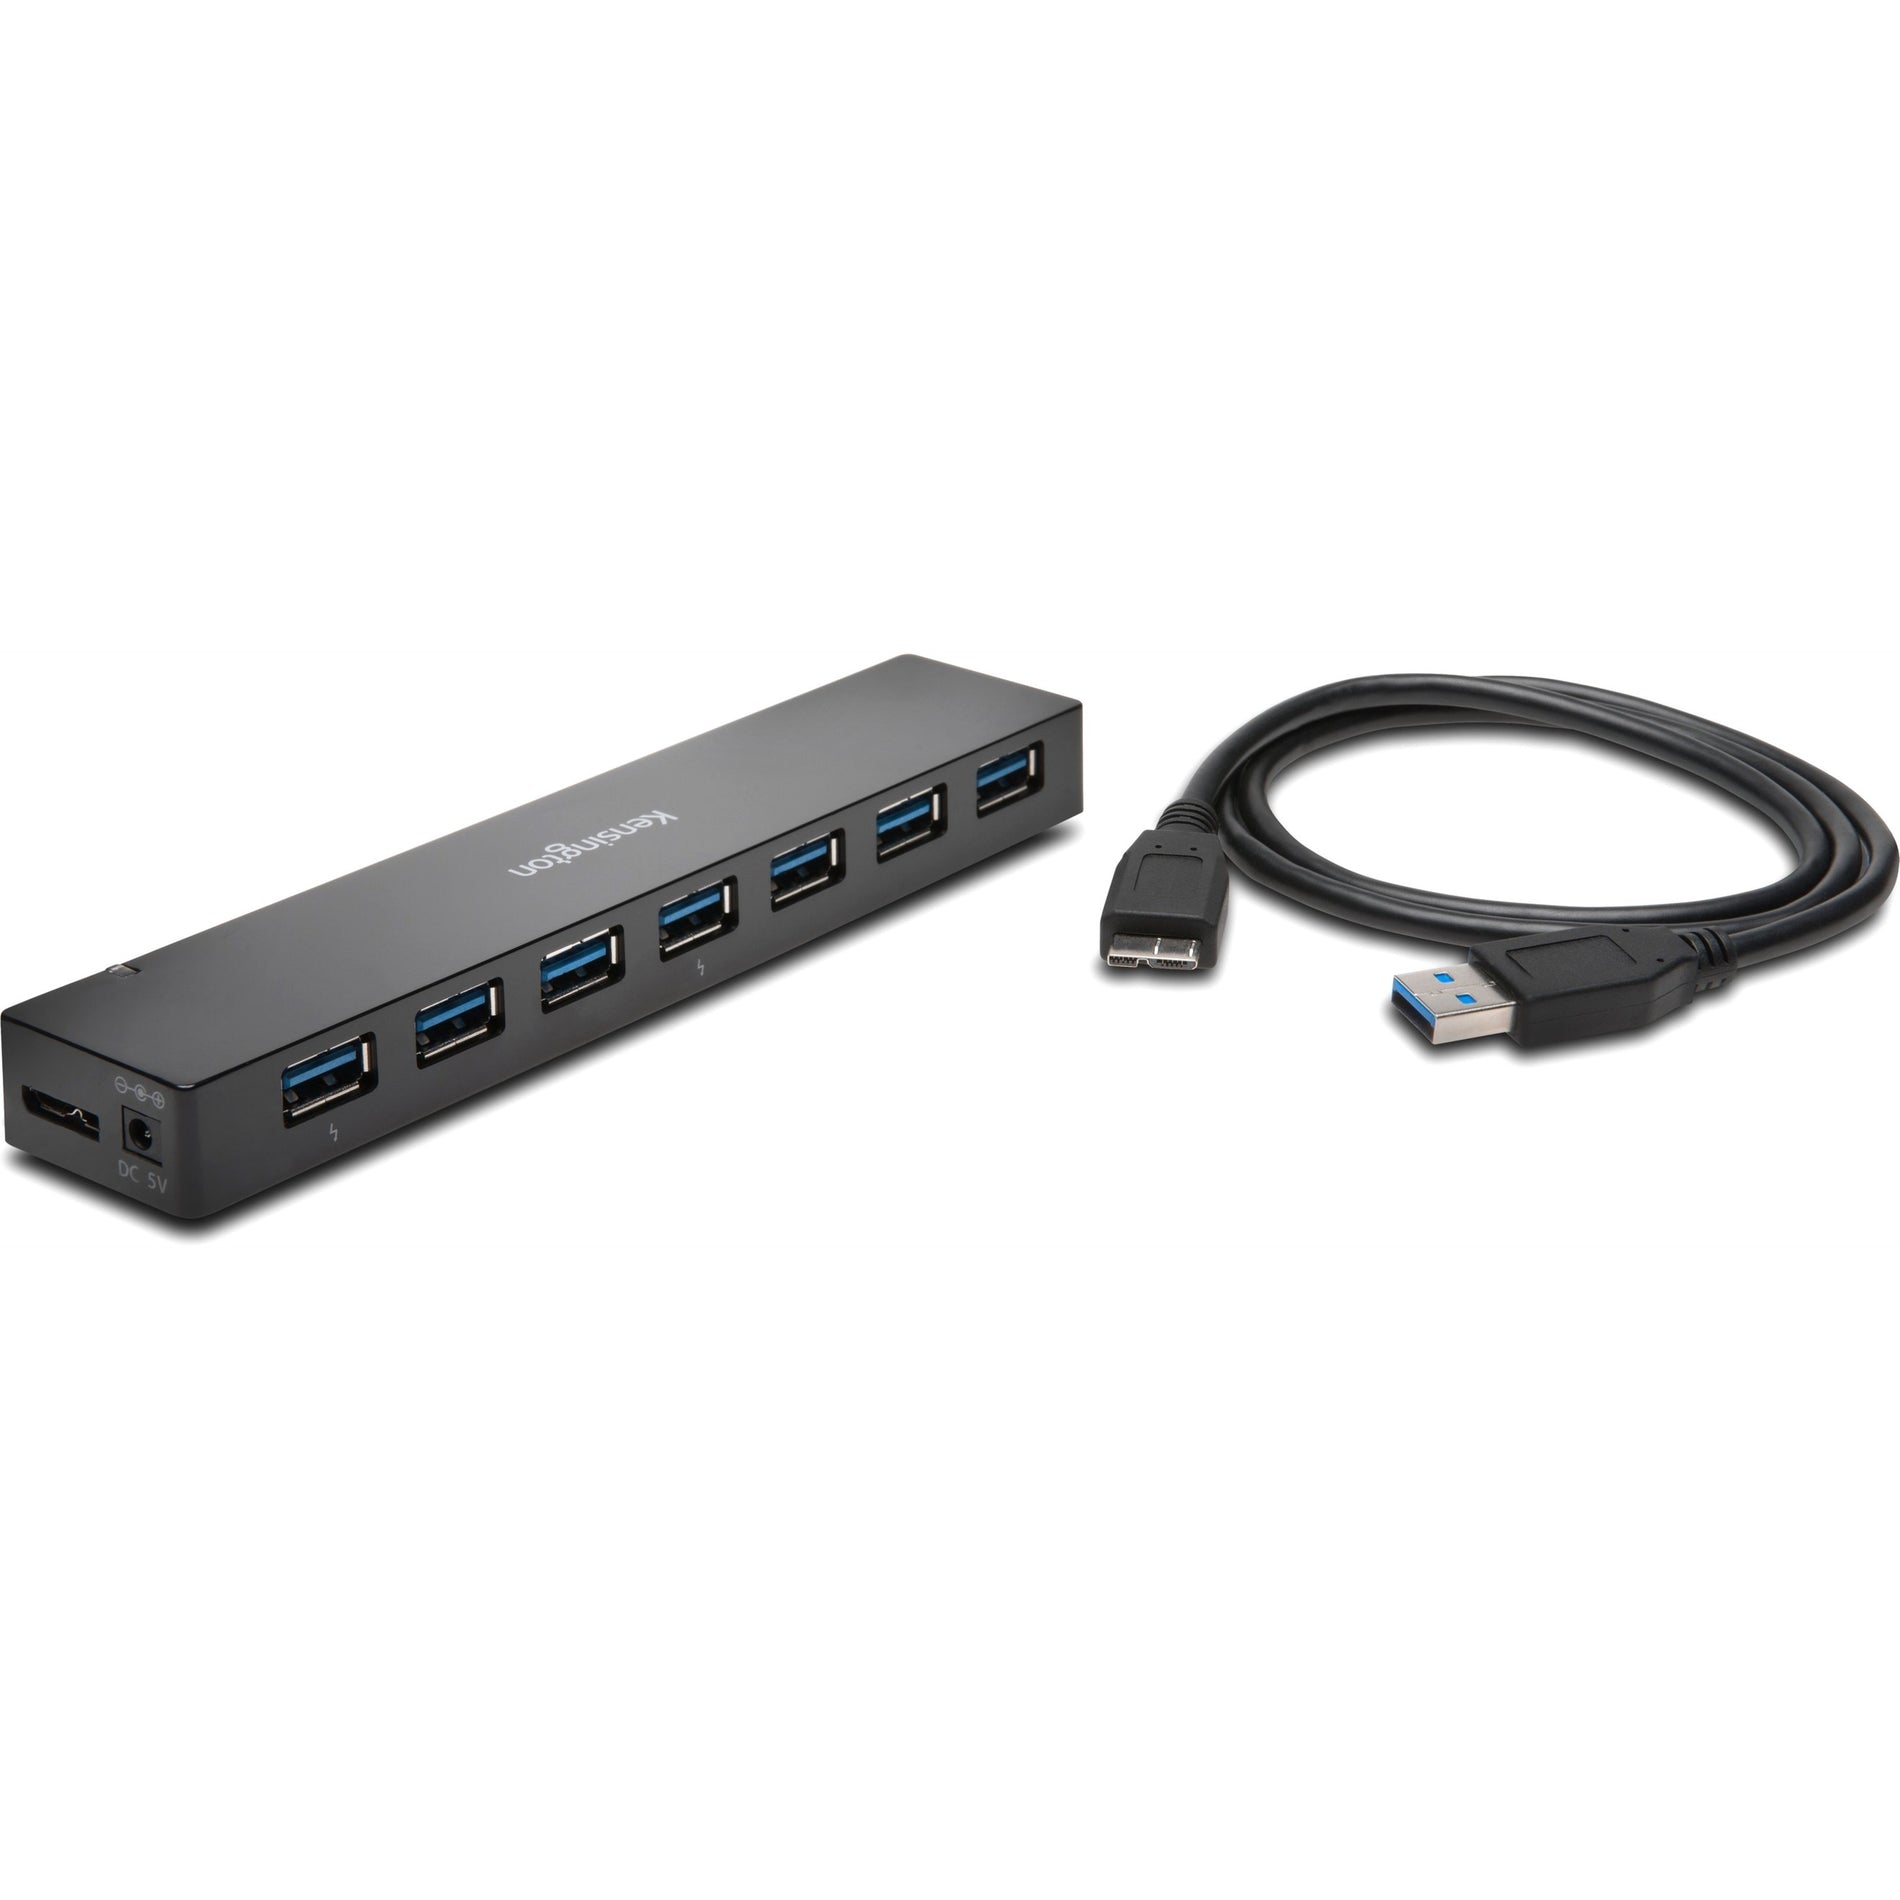 Kensington K39123AM USB 3.0 7-Port Hub with Charging, 2 Year Warranty, PC/Mac Compatible